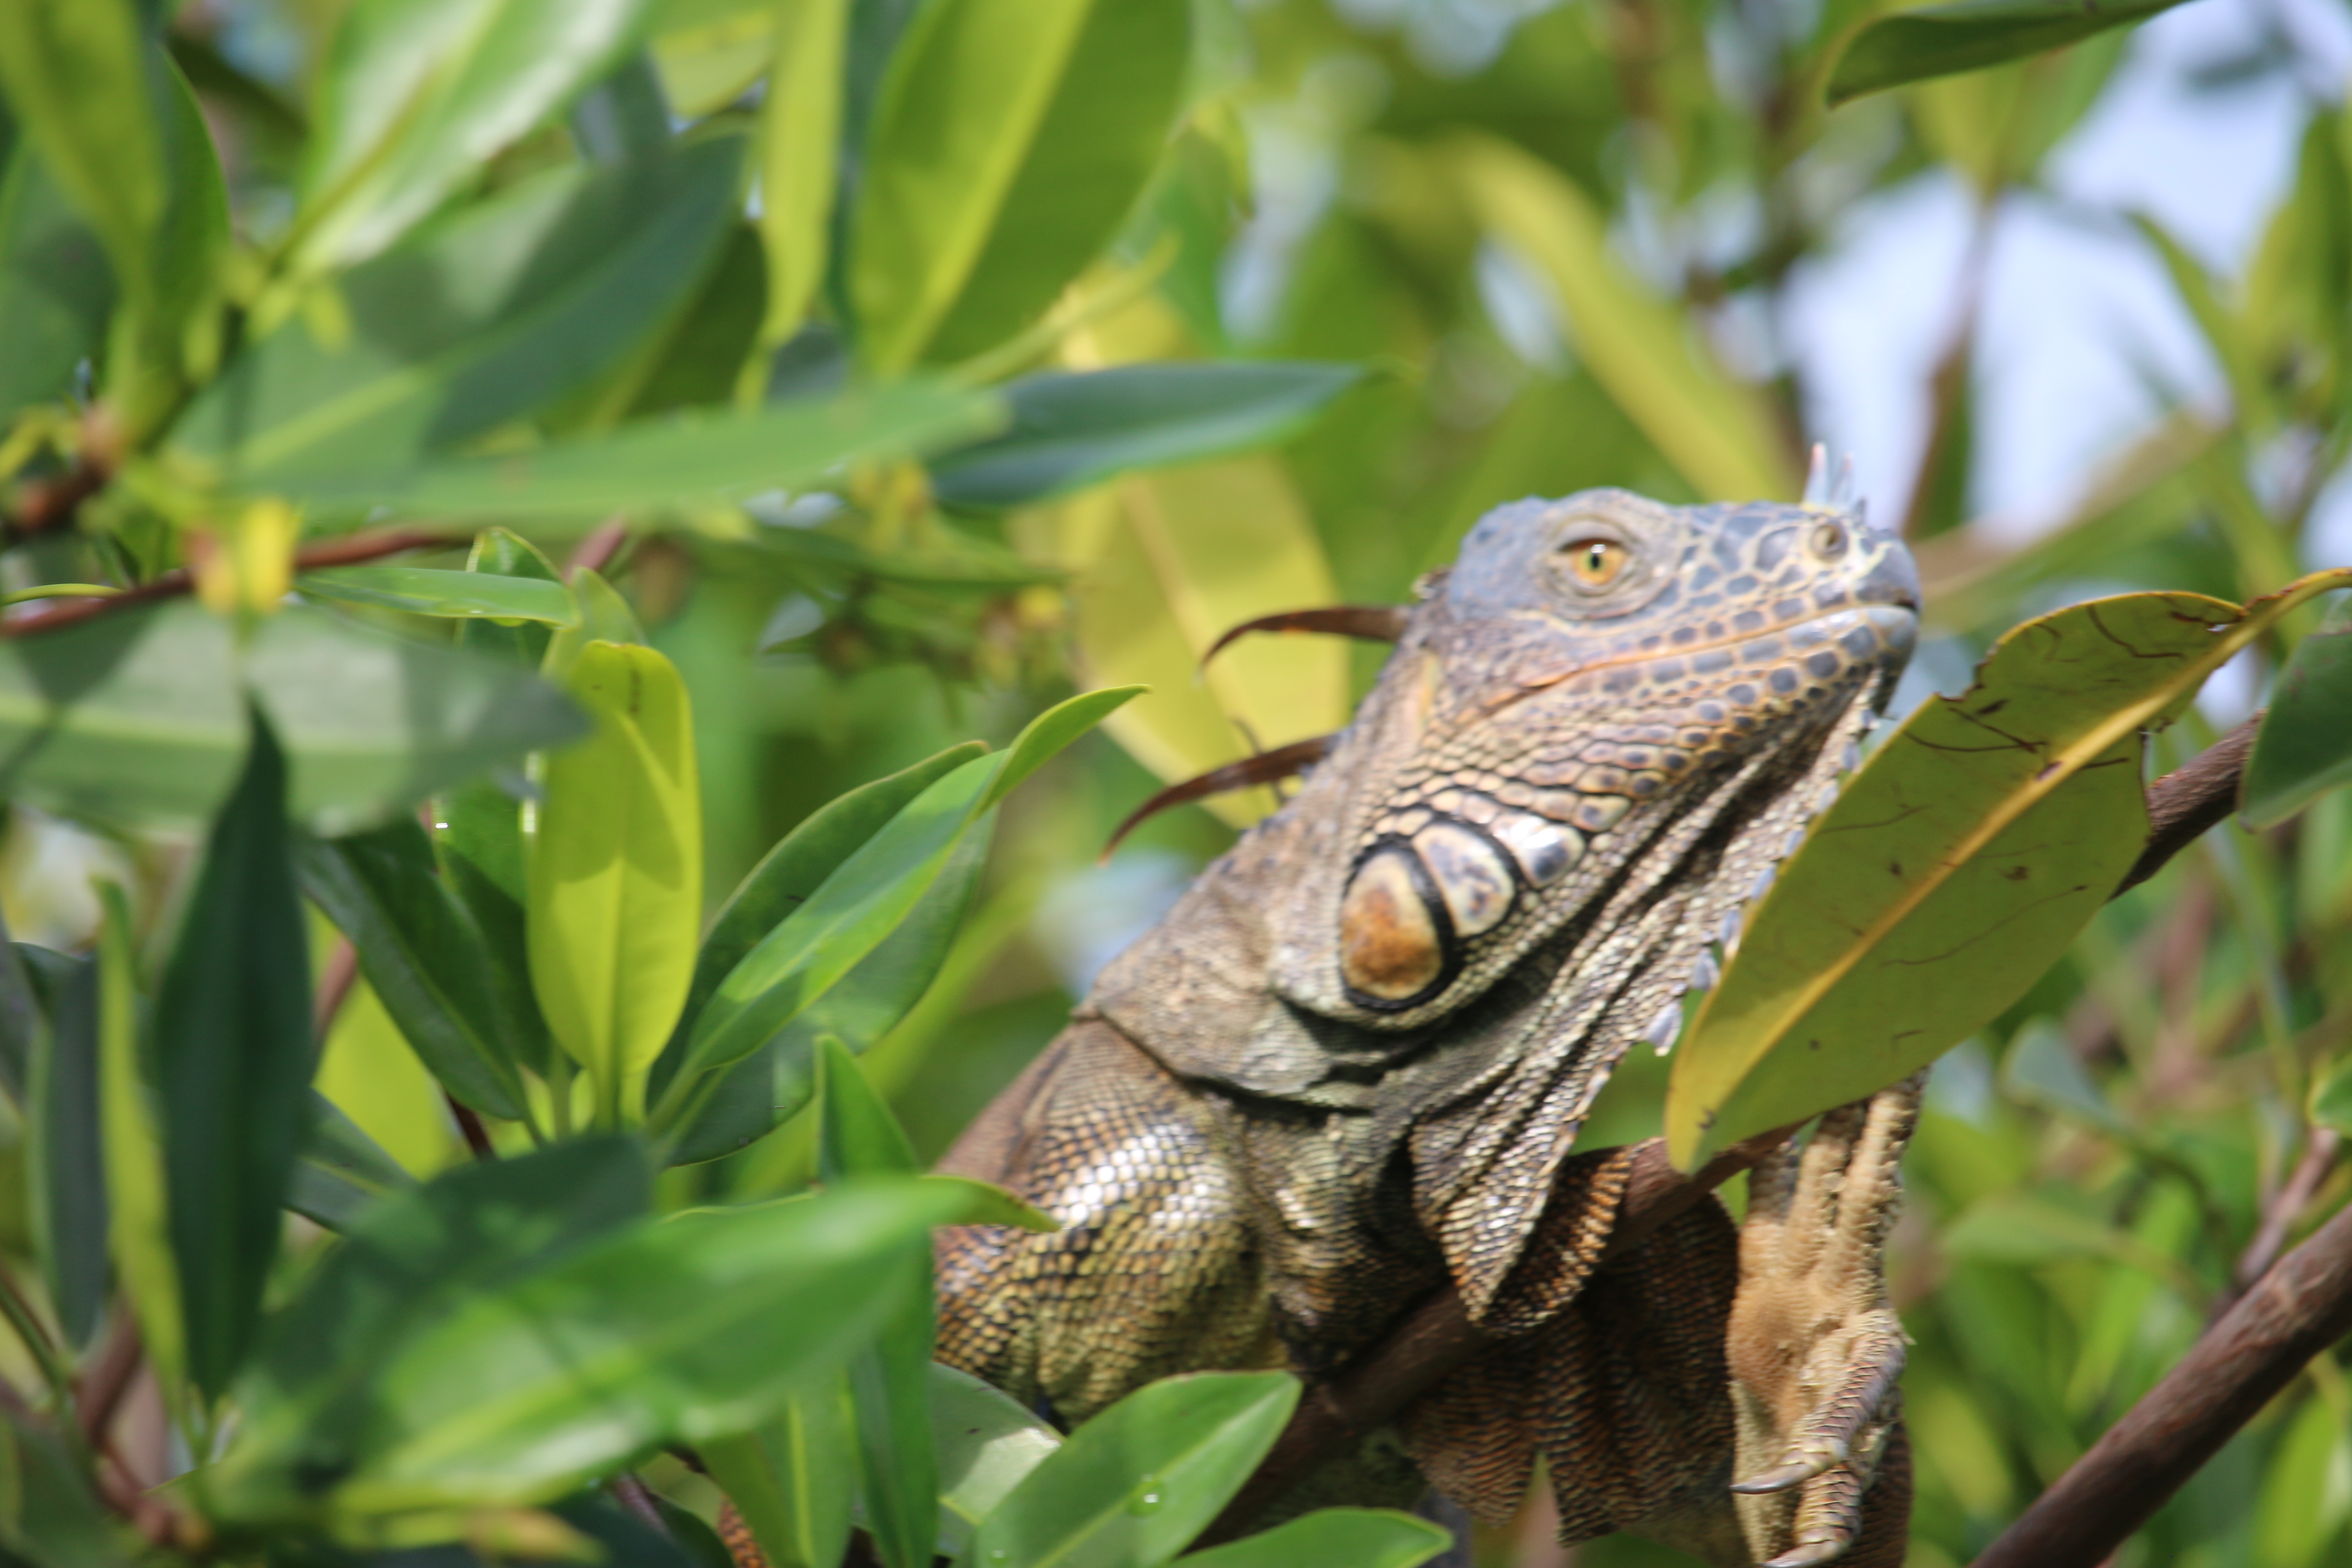 Immature male Green Iguana